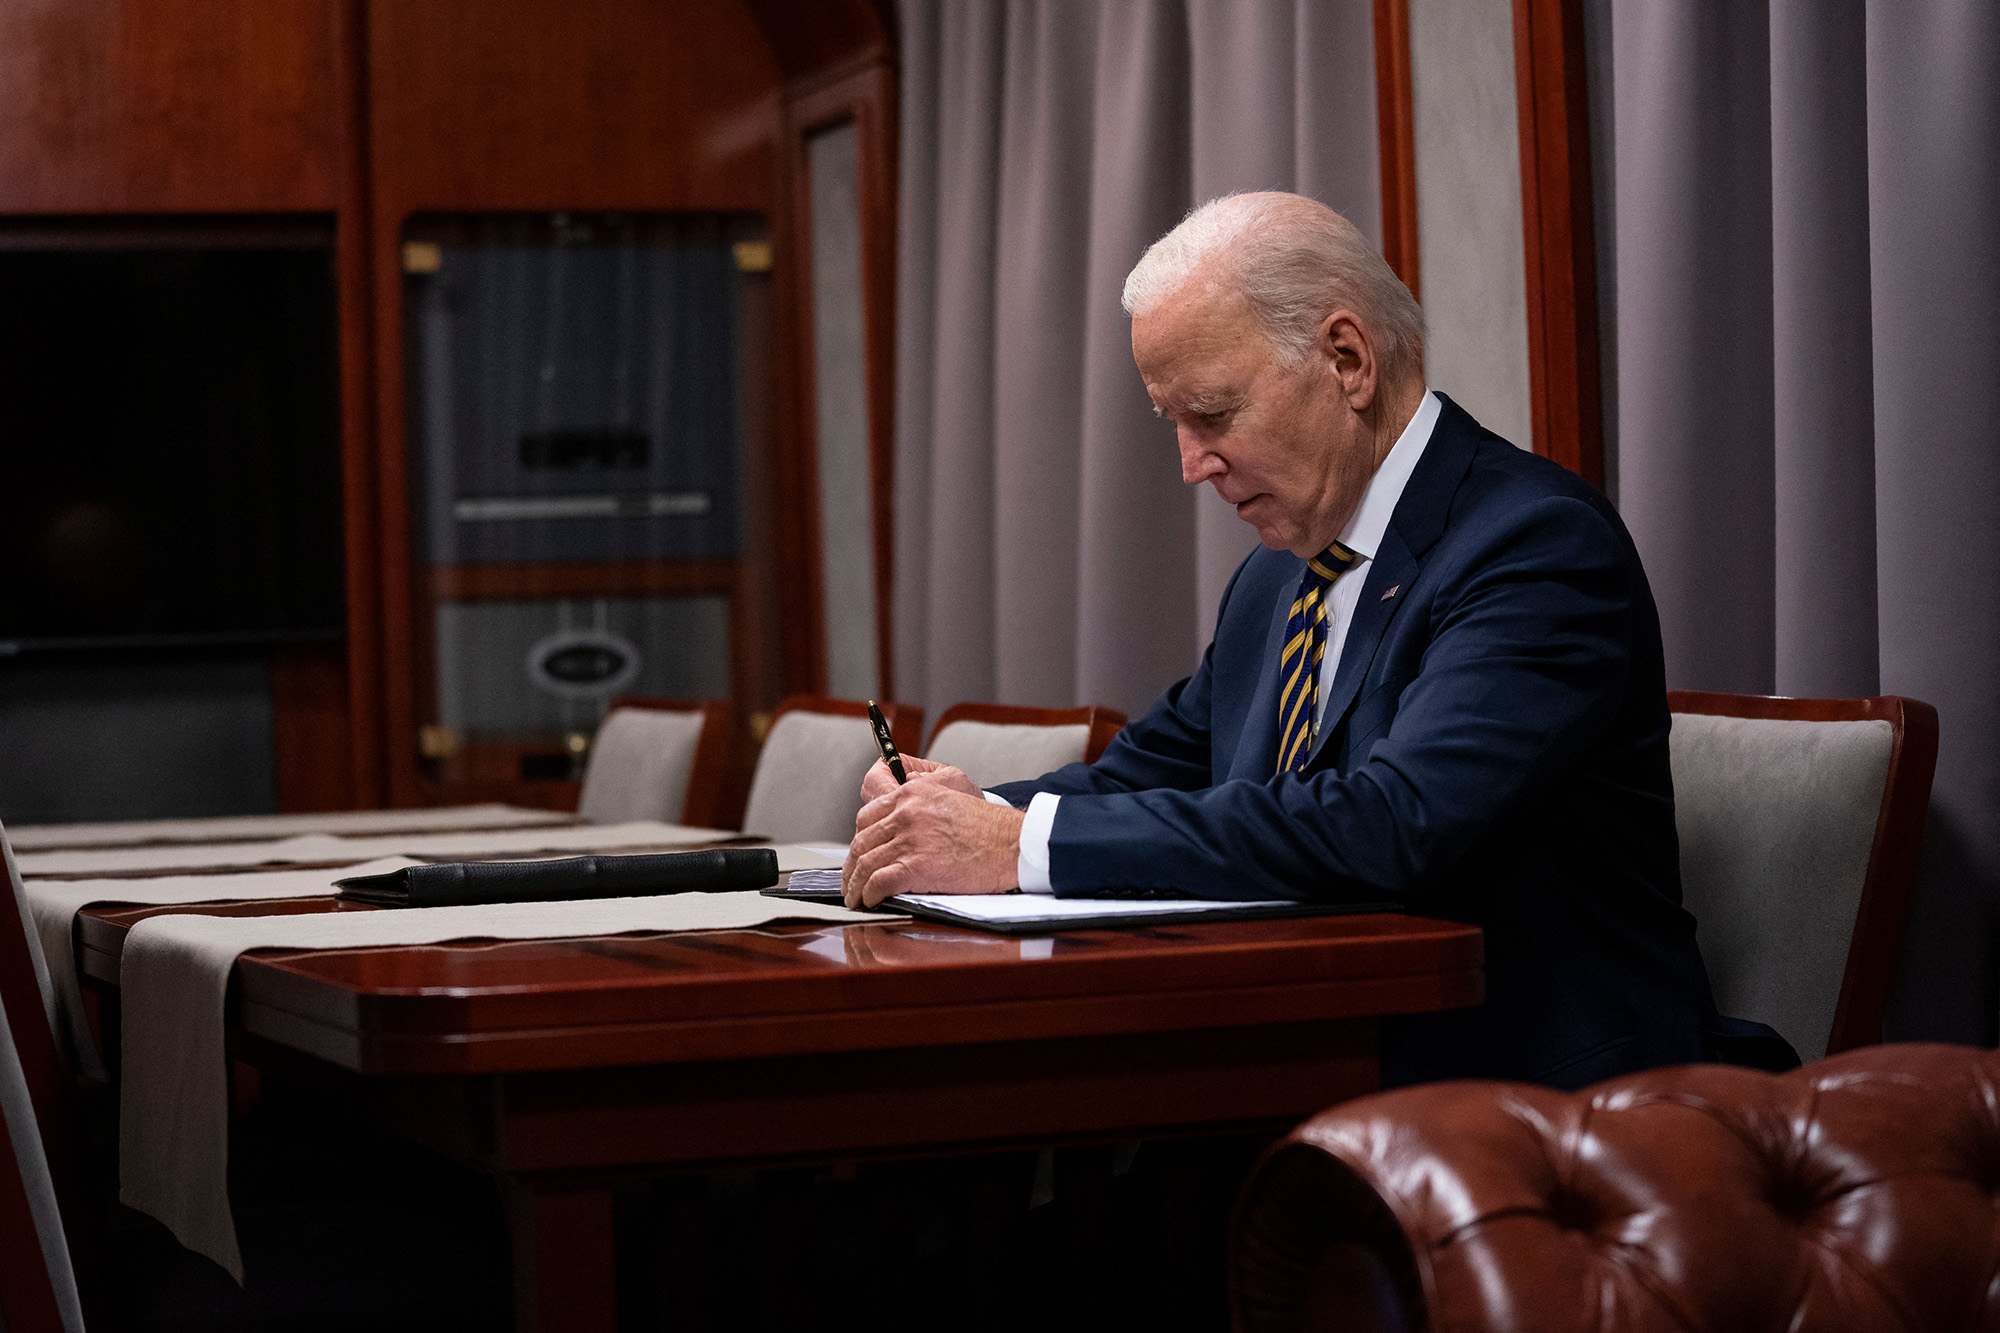 U.S. President Joe Biden sits on a train reviewing his speech after a surprise meeting with Ukrainian President Volodymyr Zelensky in Kiev, Ukraine, on Feb. 20.